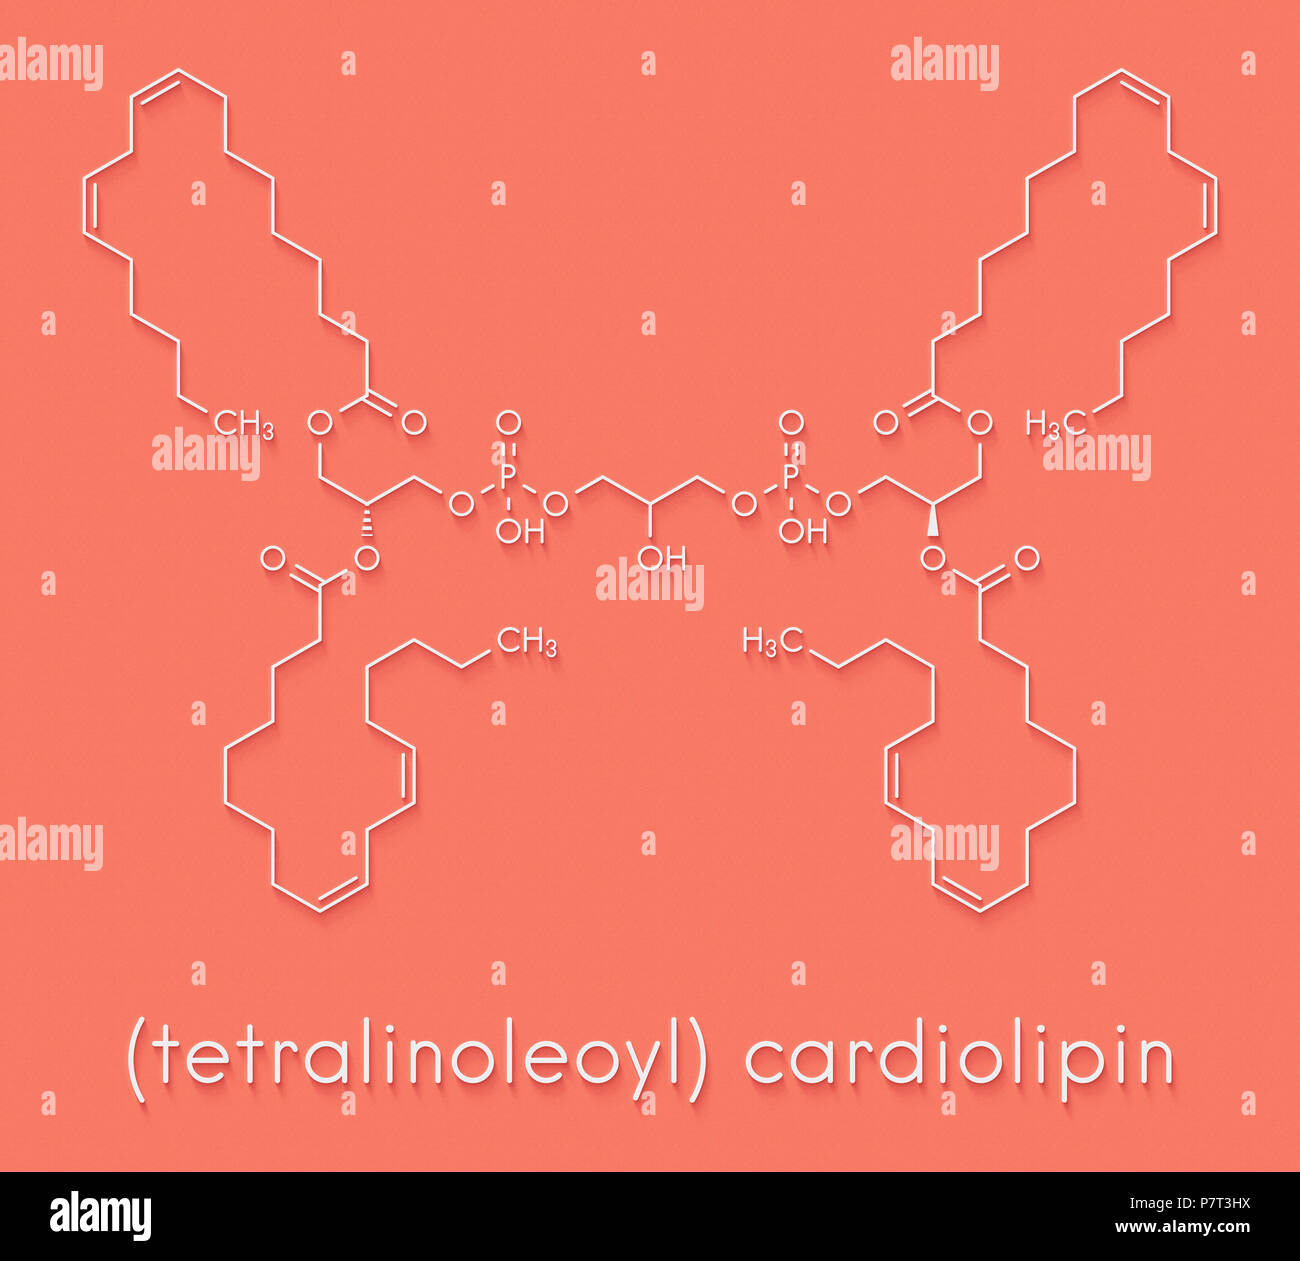 Cardiolipin (tetralinoleoyl cardiolipin) Molekül. Wichtiger Bestandteil der inneren Membran der Mitochondrien. Skelettmuskulatur Formel. Stockfoto